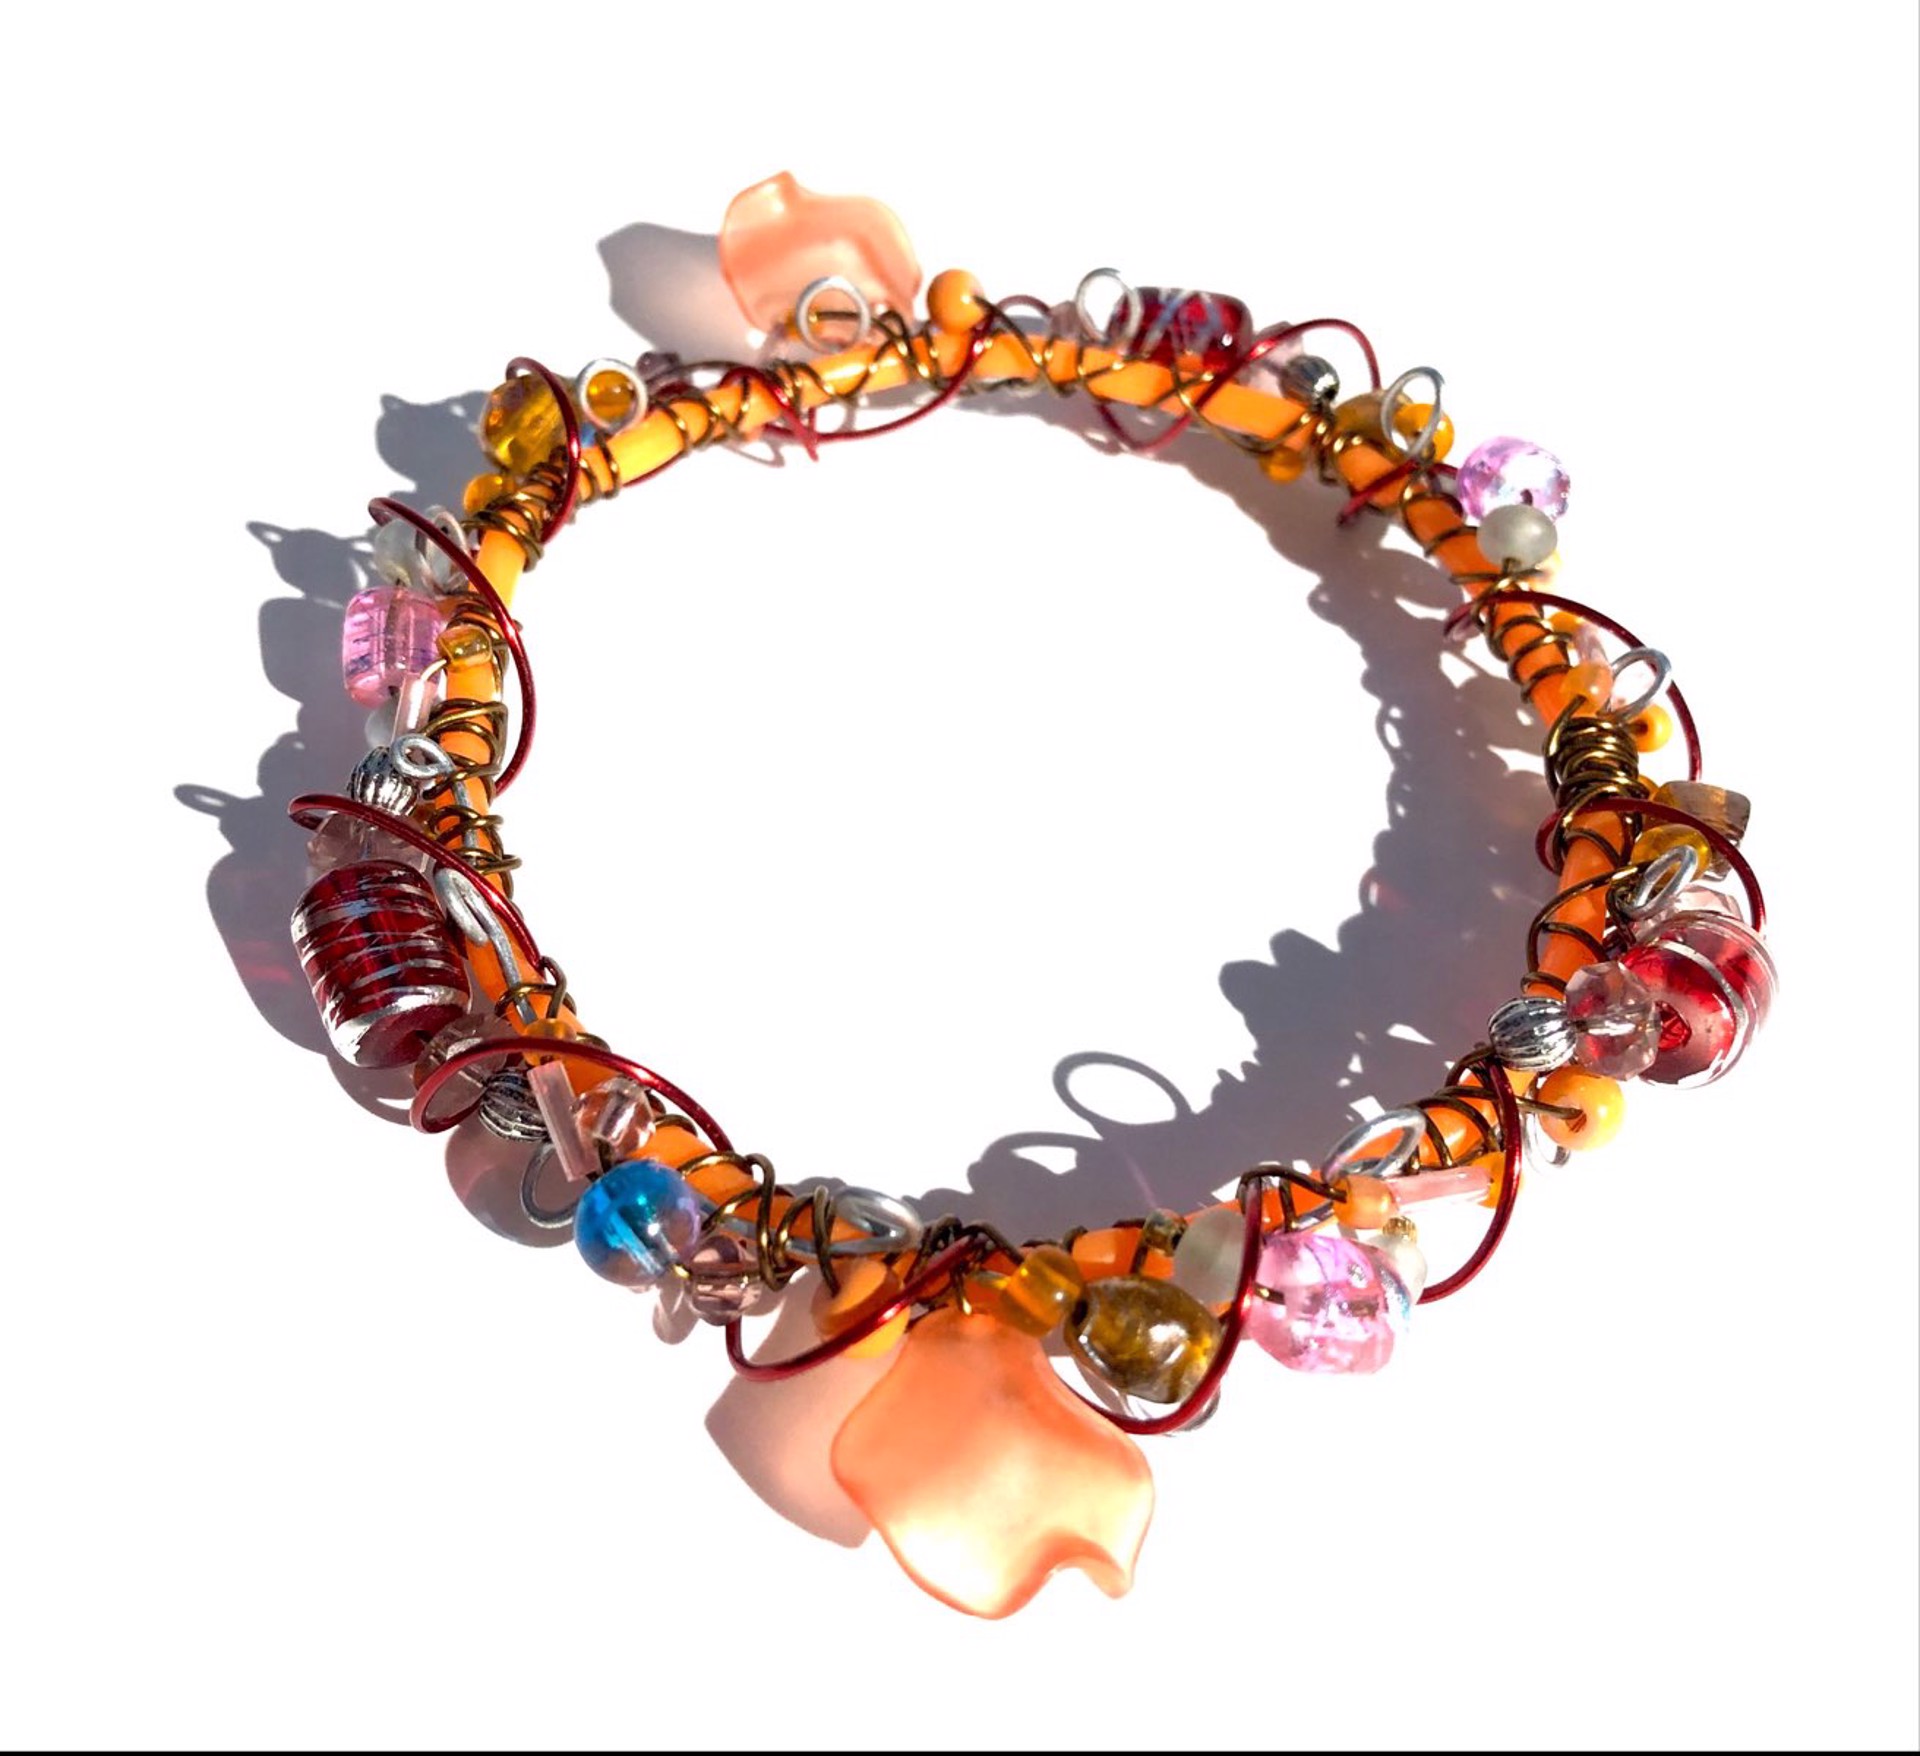 Twisted Wire & Beads Bracelet by Karen Linduska